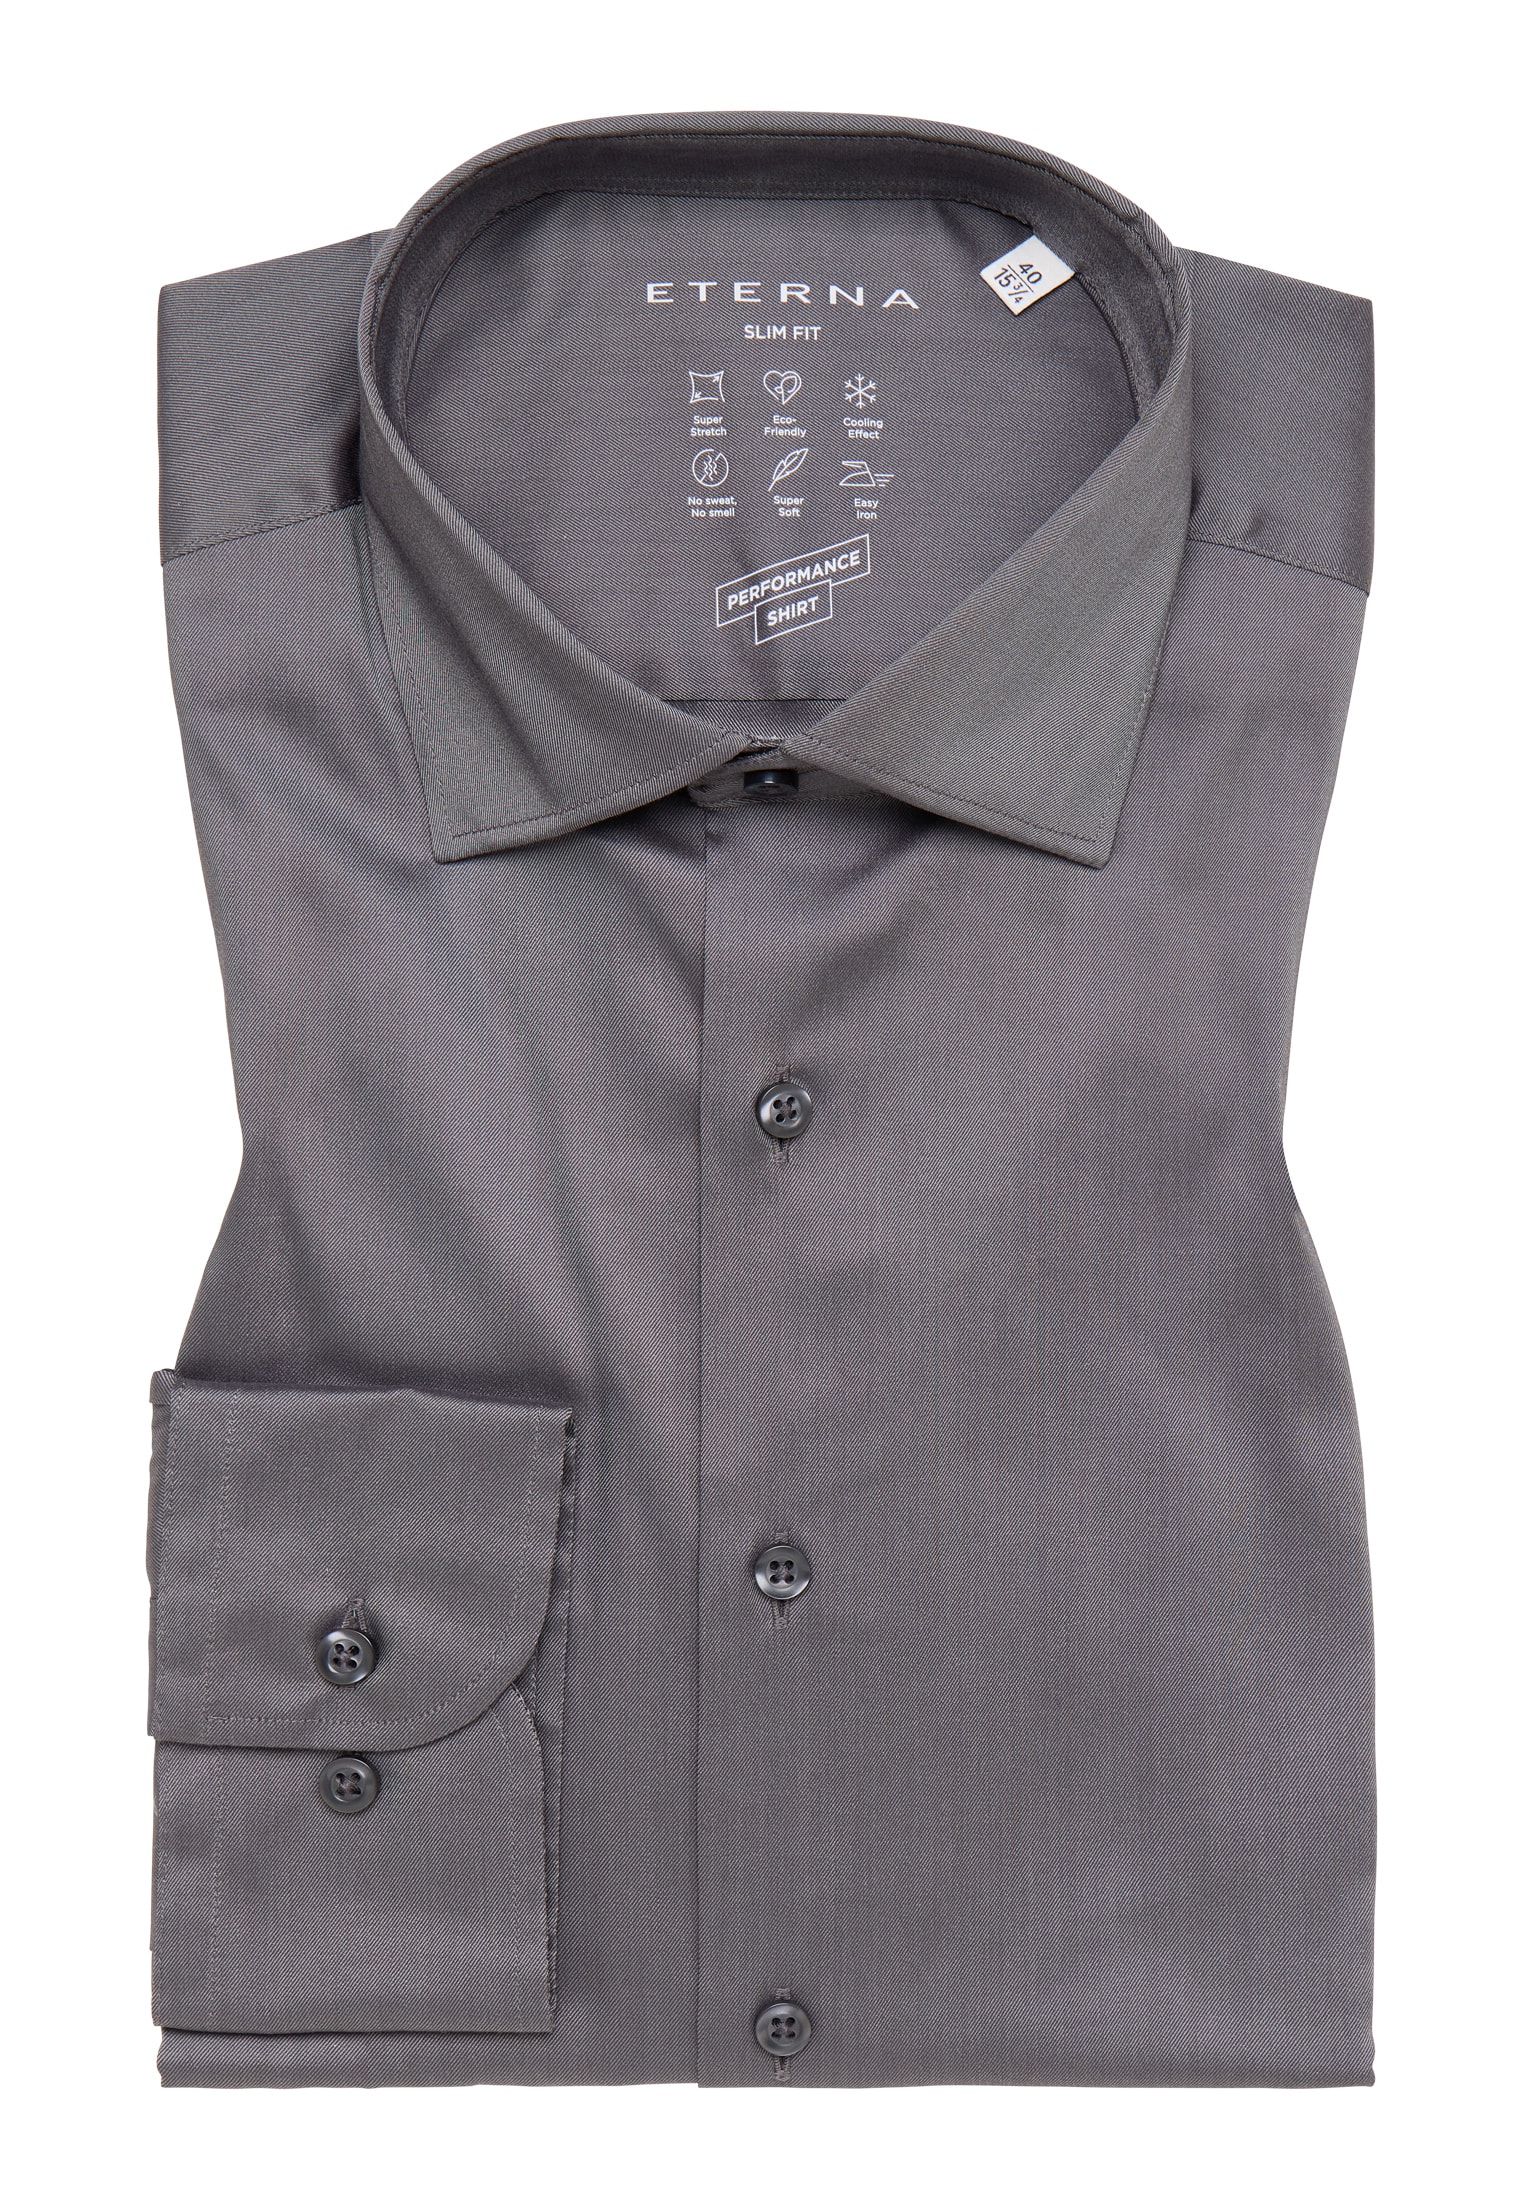 SLIM FIT Performance Shirt Arm grau | 43 1SH02217-03-01-43-72 (72 langer | unifarben super | | grau cm) in